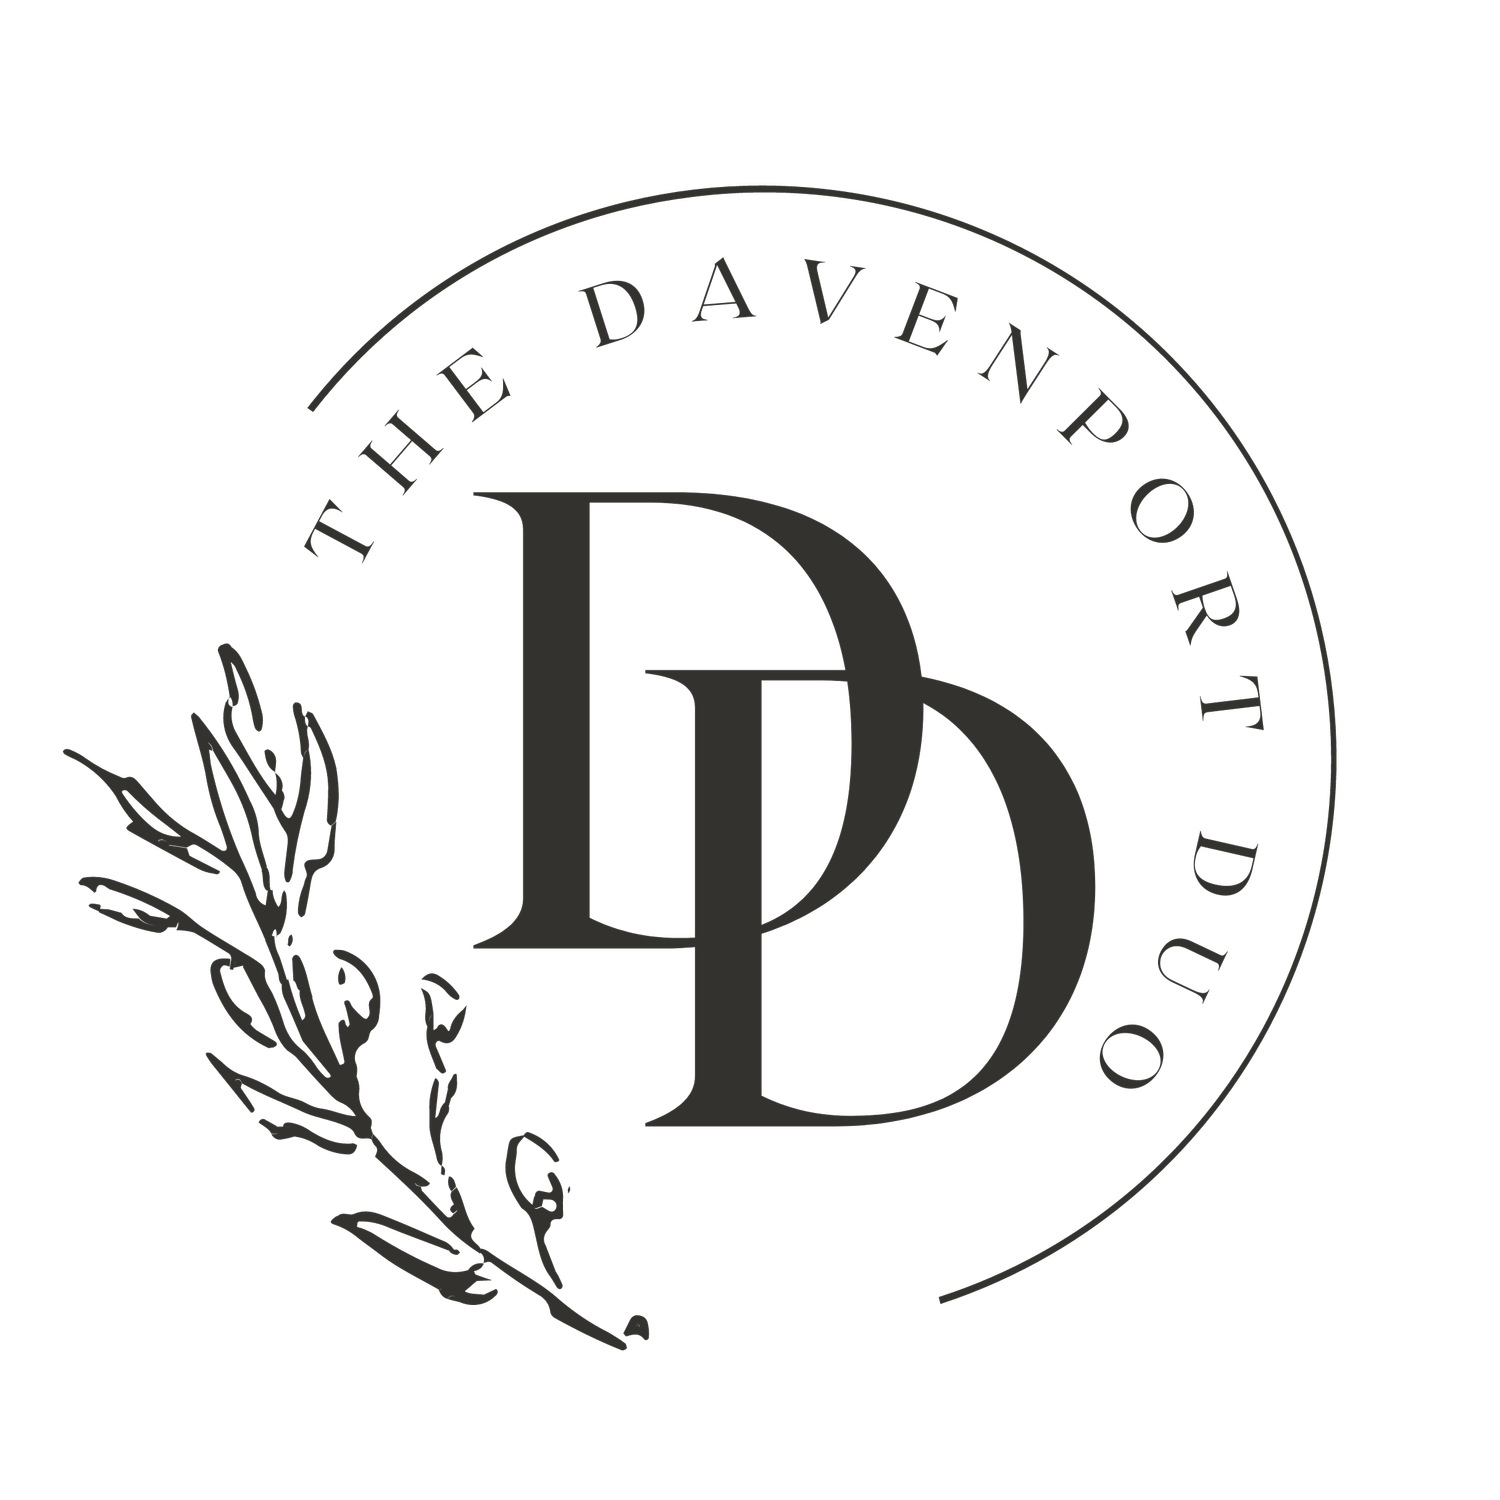 The Davenport Duo